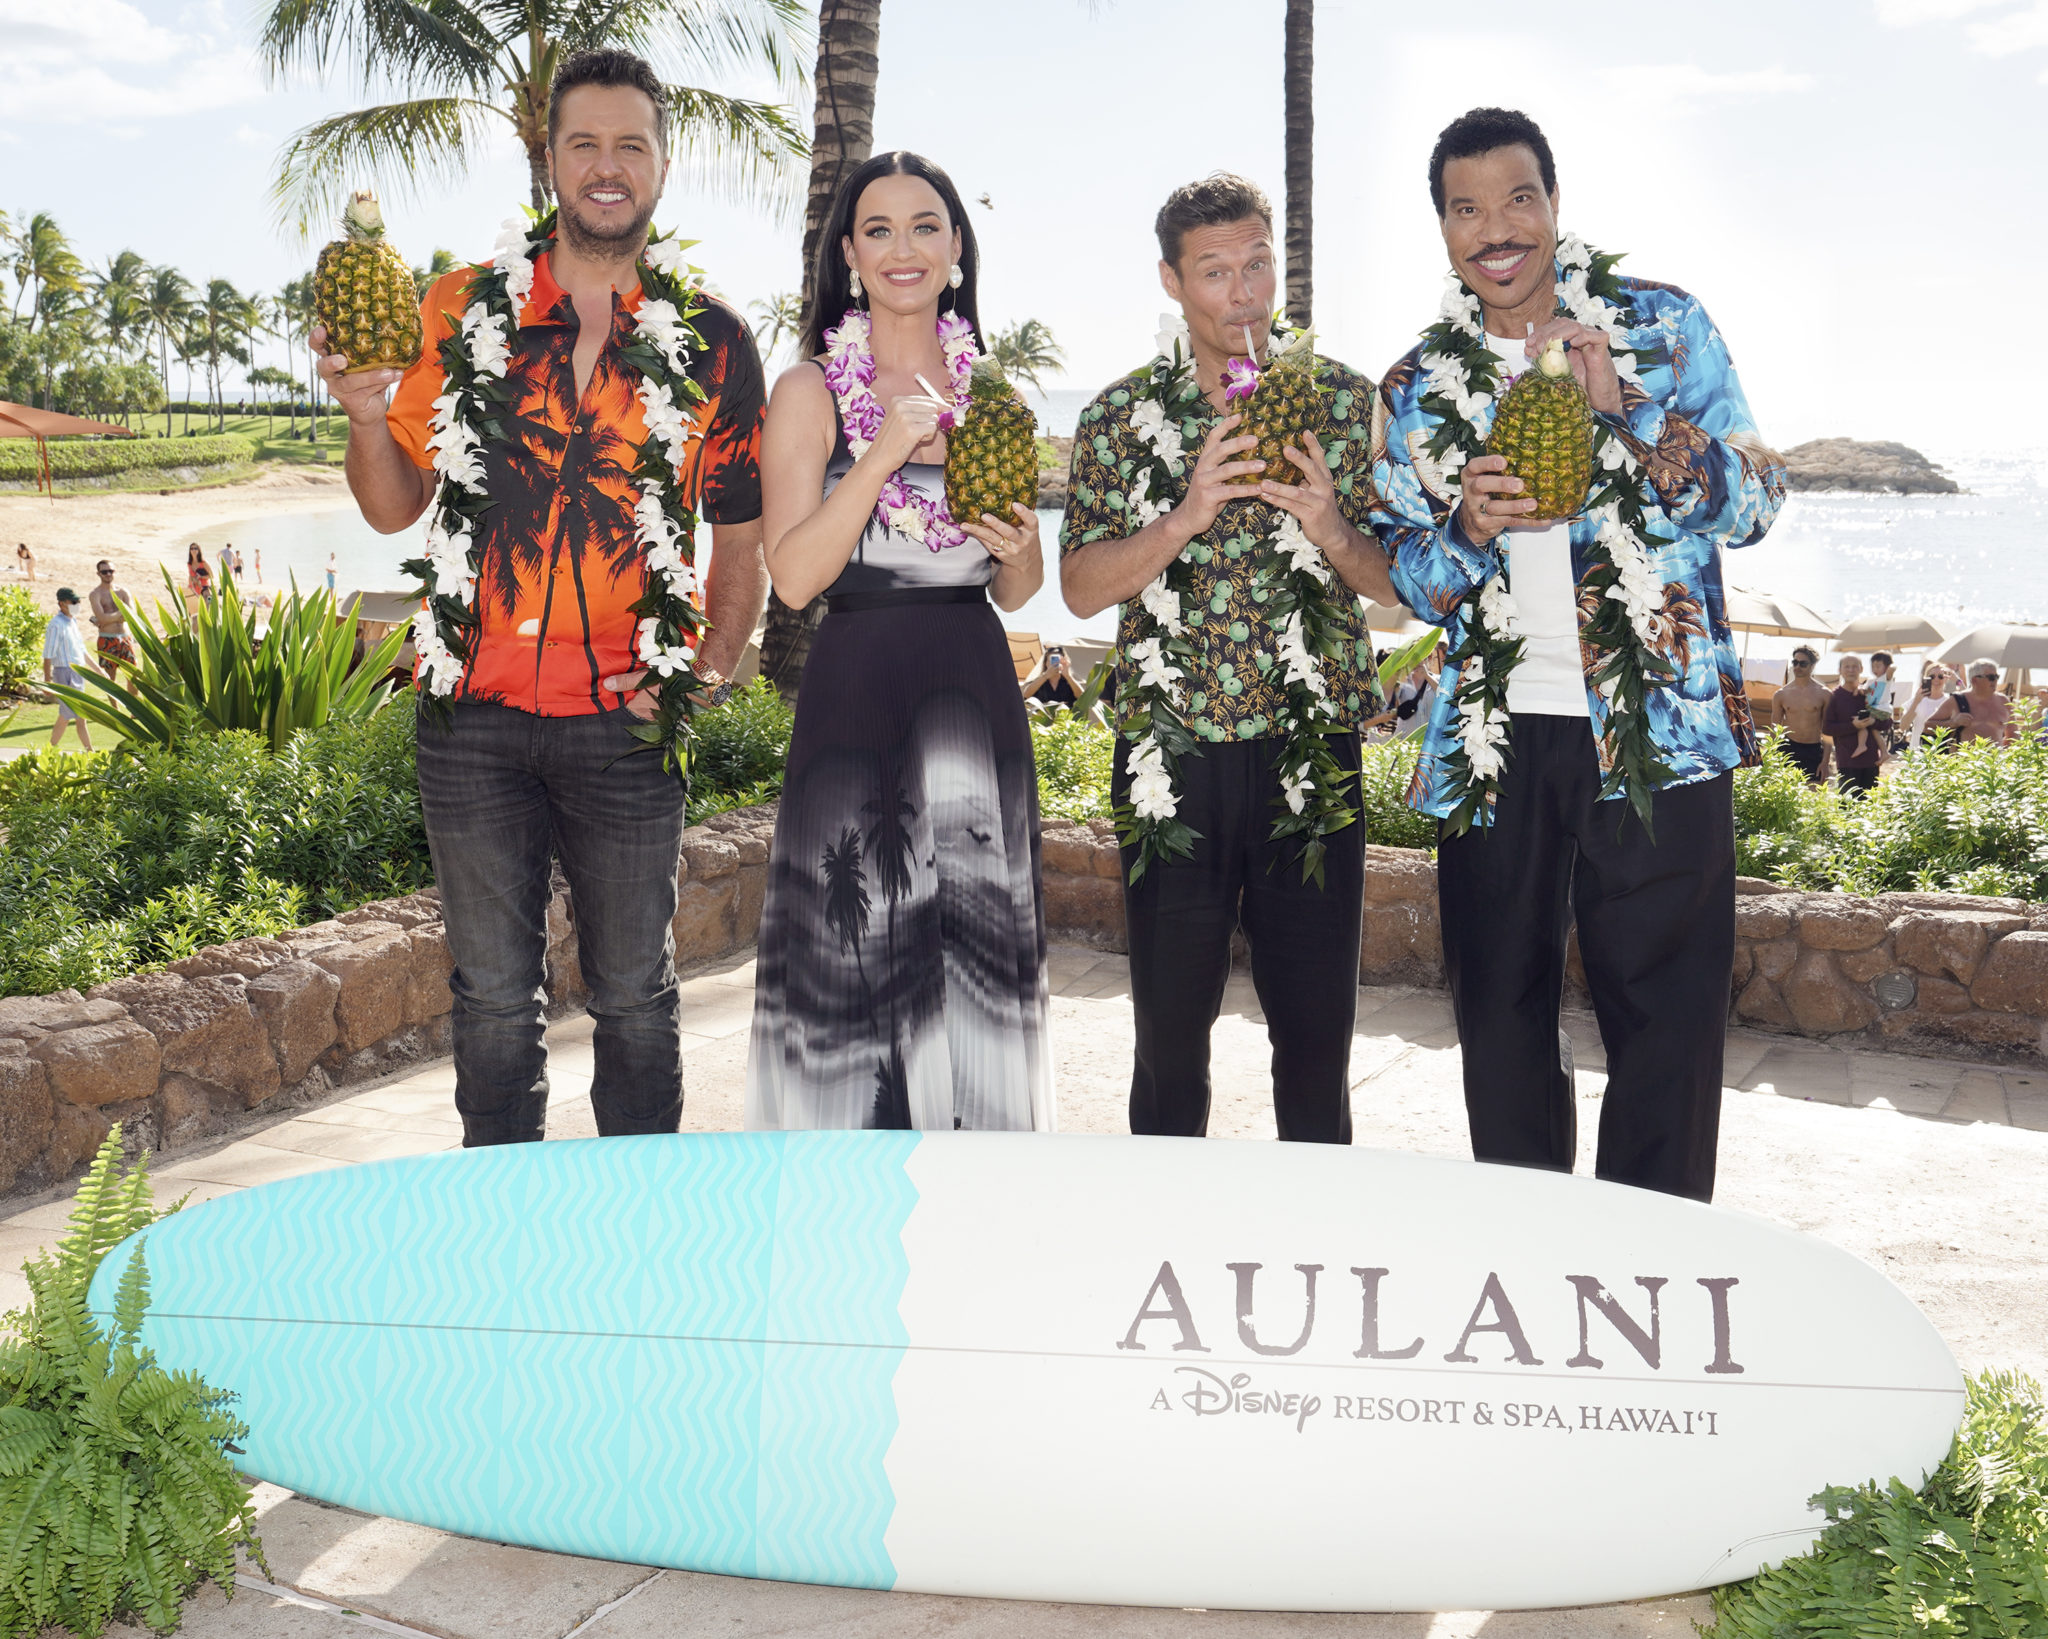 American Idol Returns To Aulani, a Disney Resort & Spa